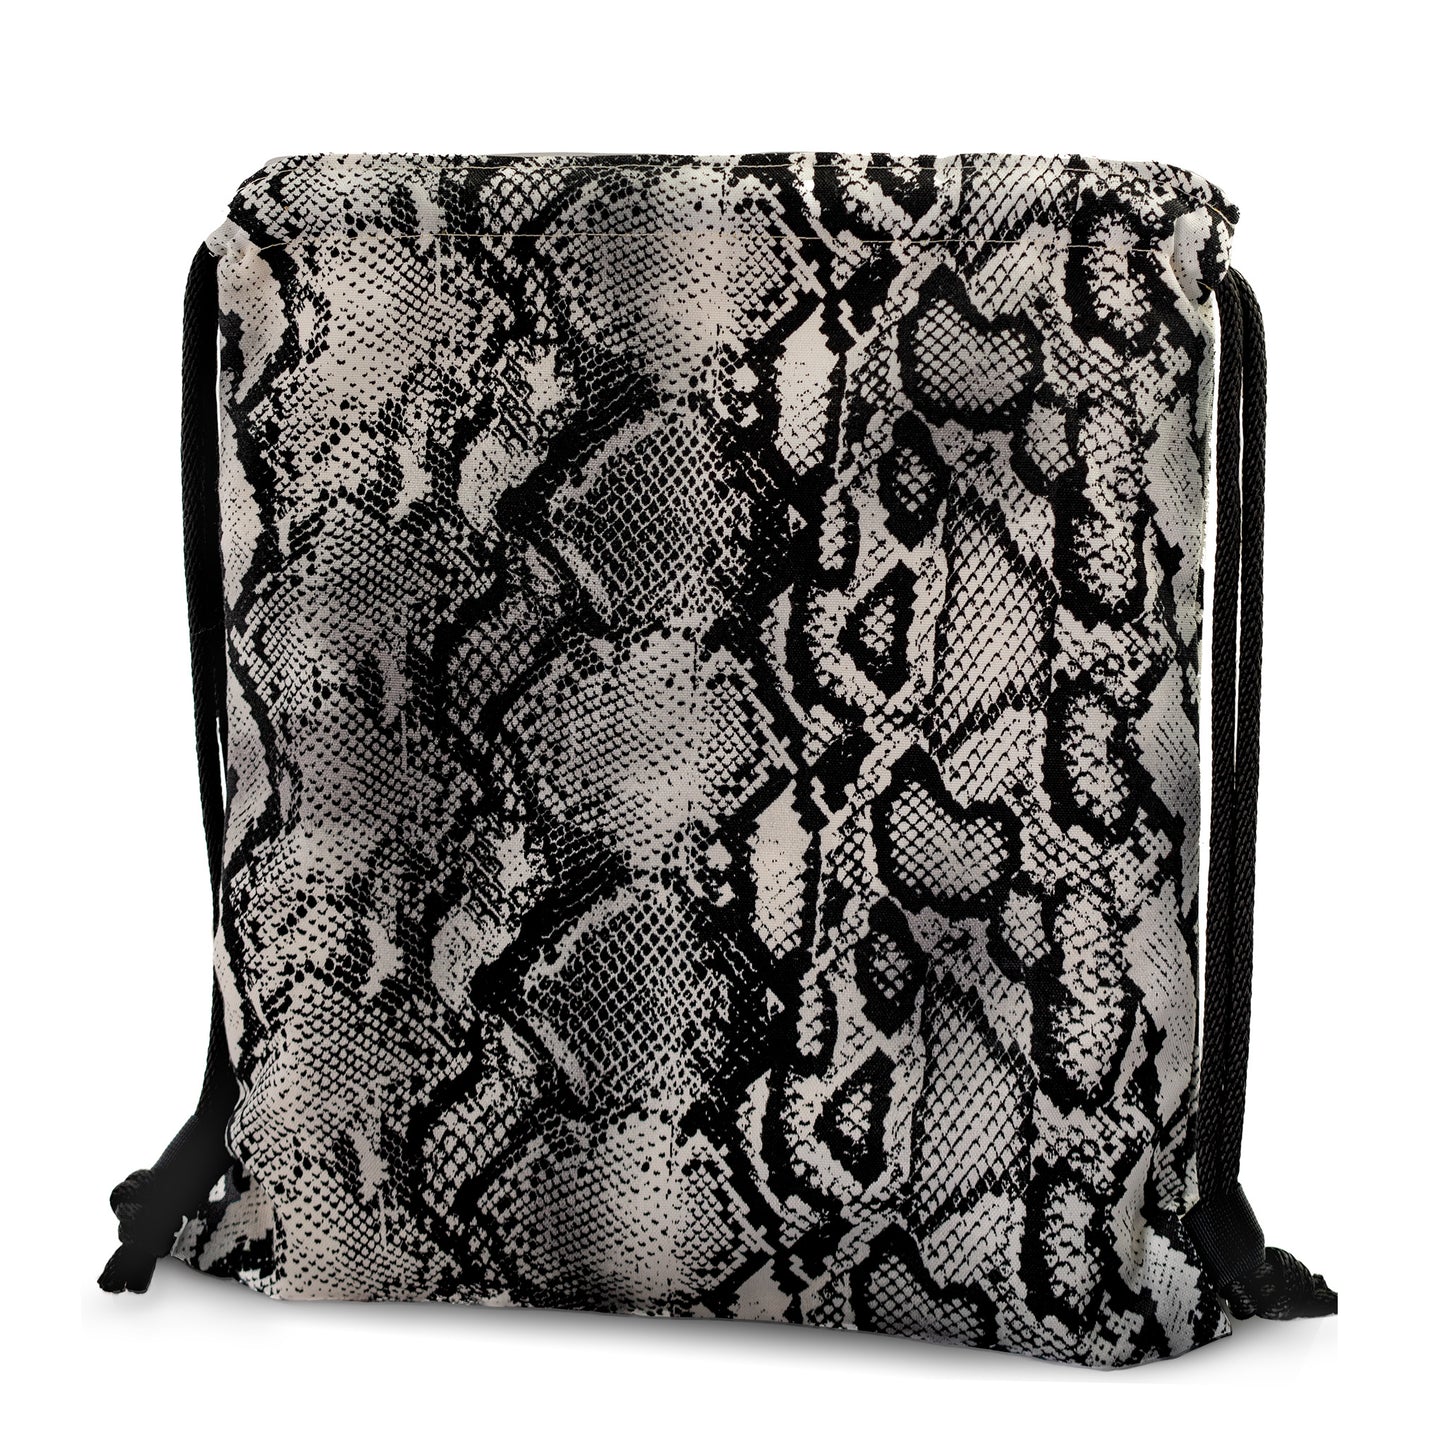 Black & White Snake Skin Print Drawstring Cinch Backpack - Niclordesigns 